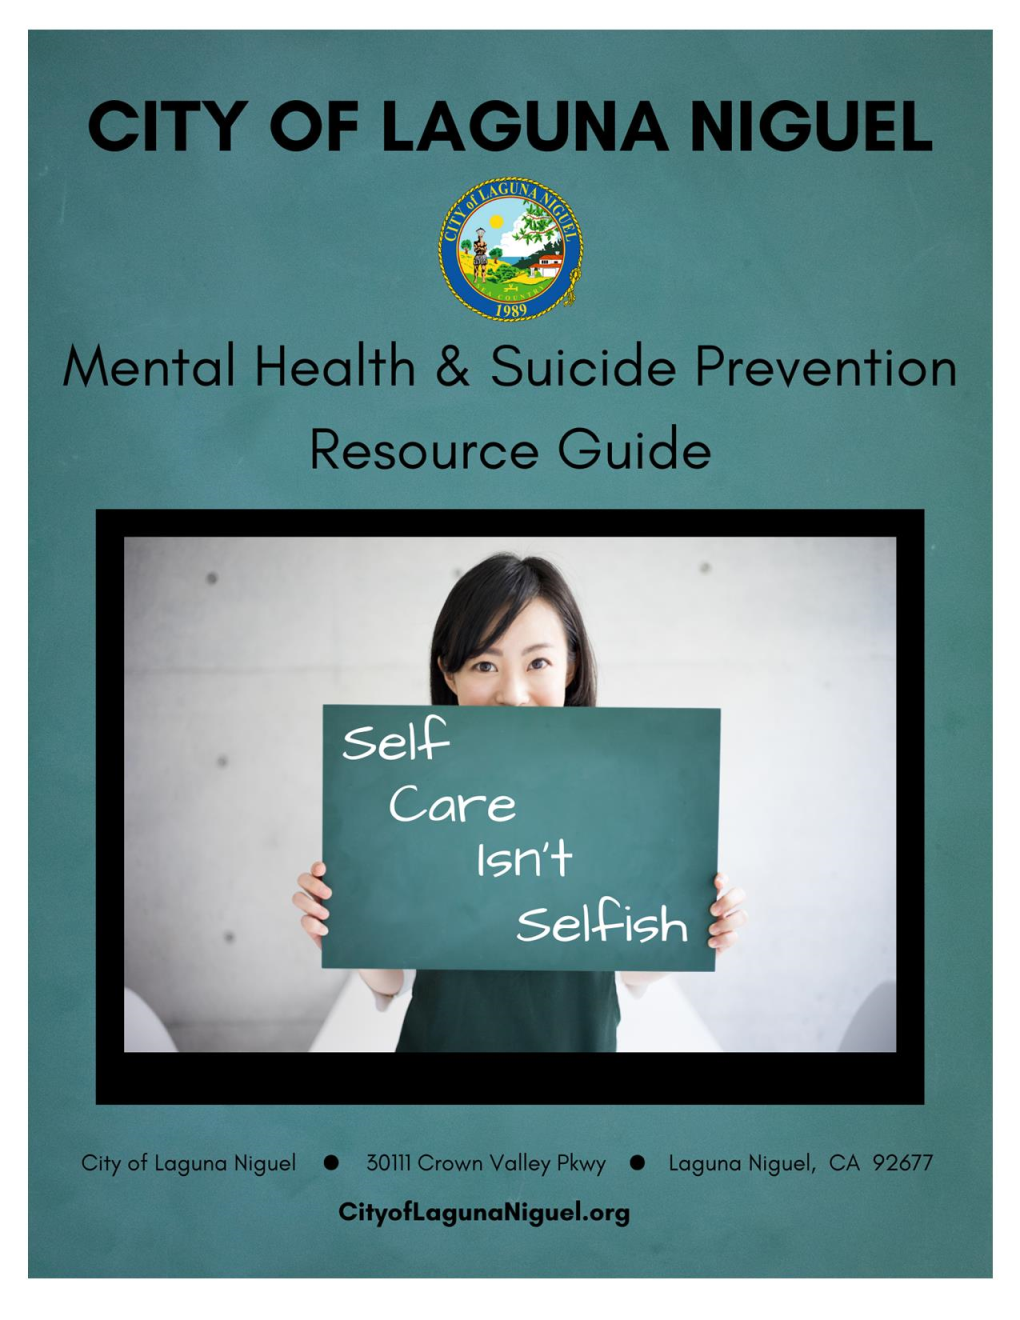 Mental Health & Suicide Prevention Resources